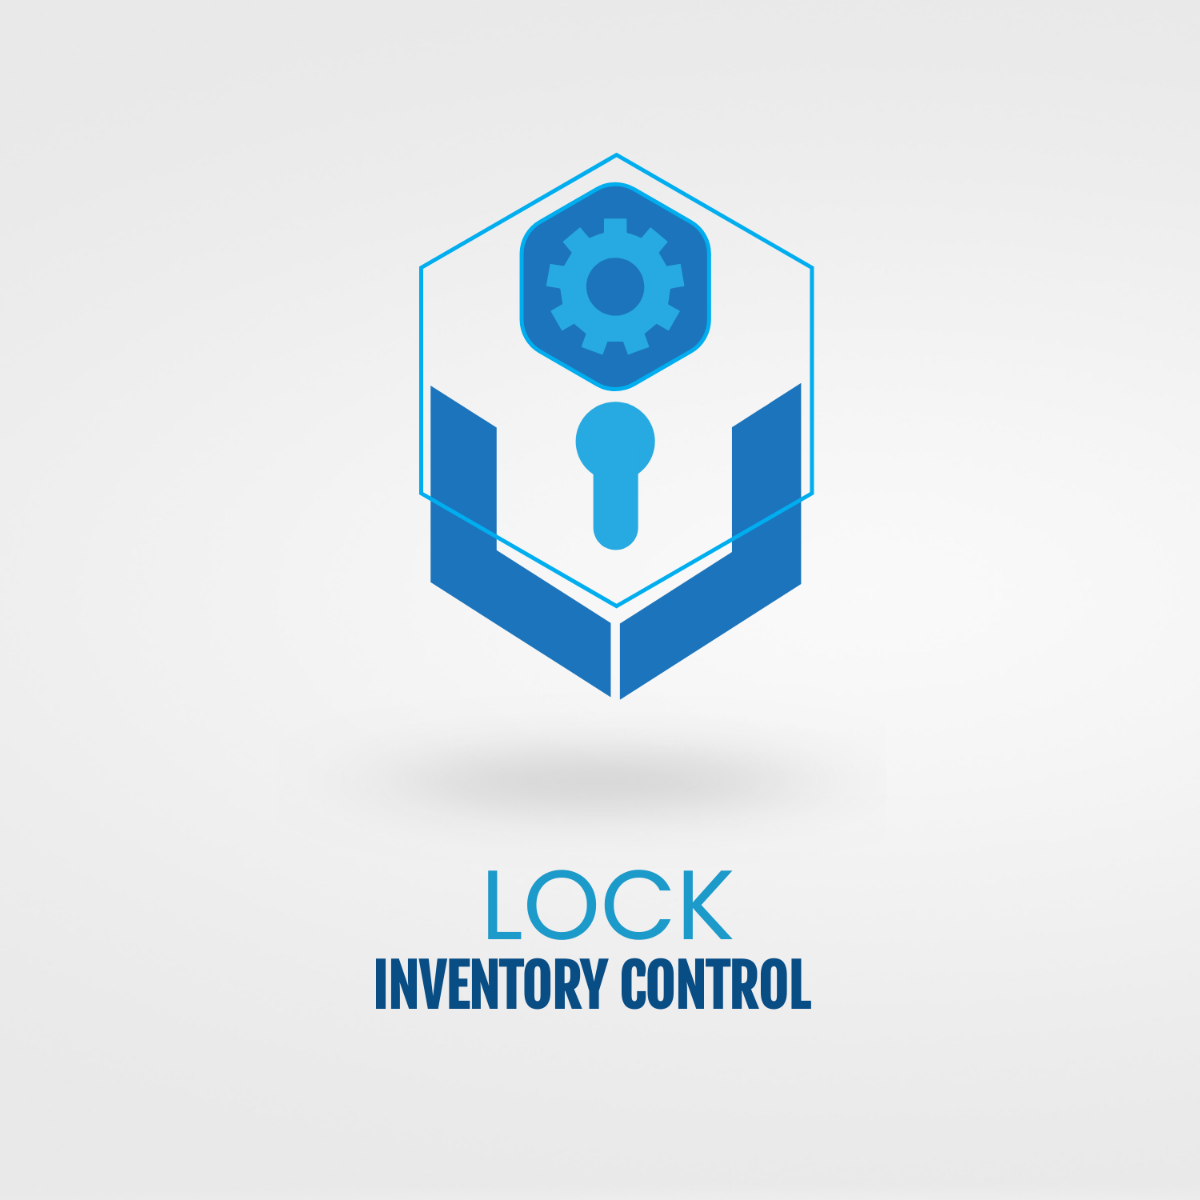 Inventory Control Lock Logo